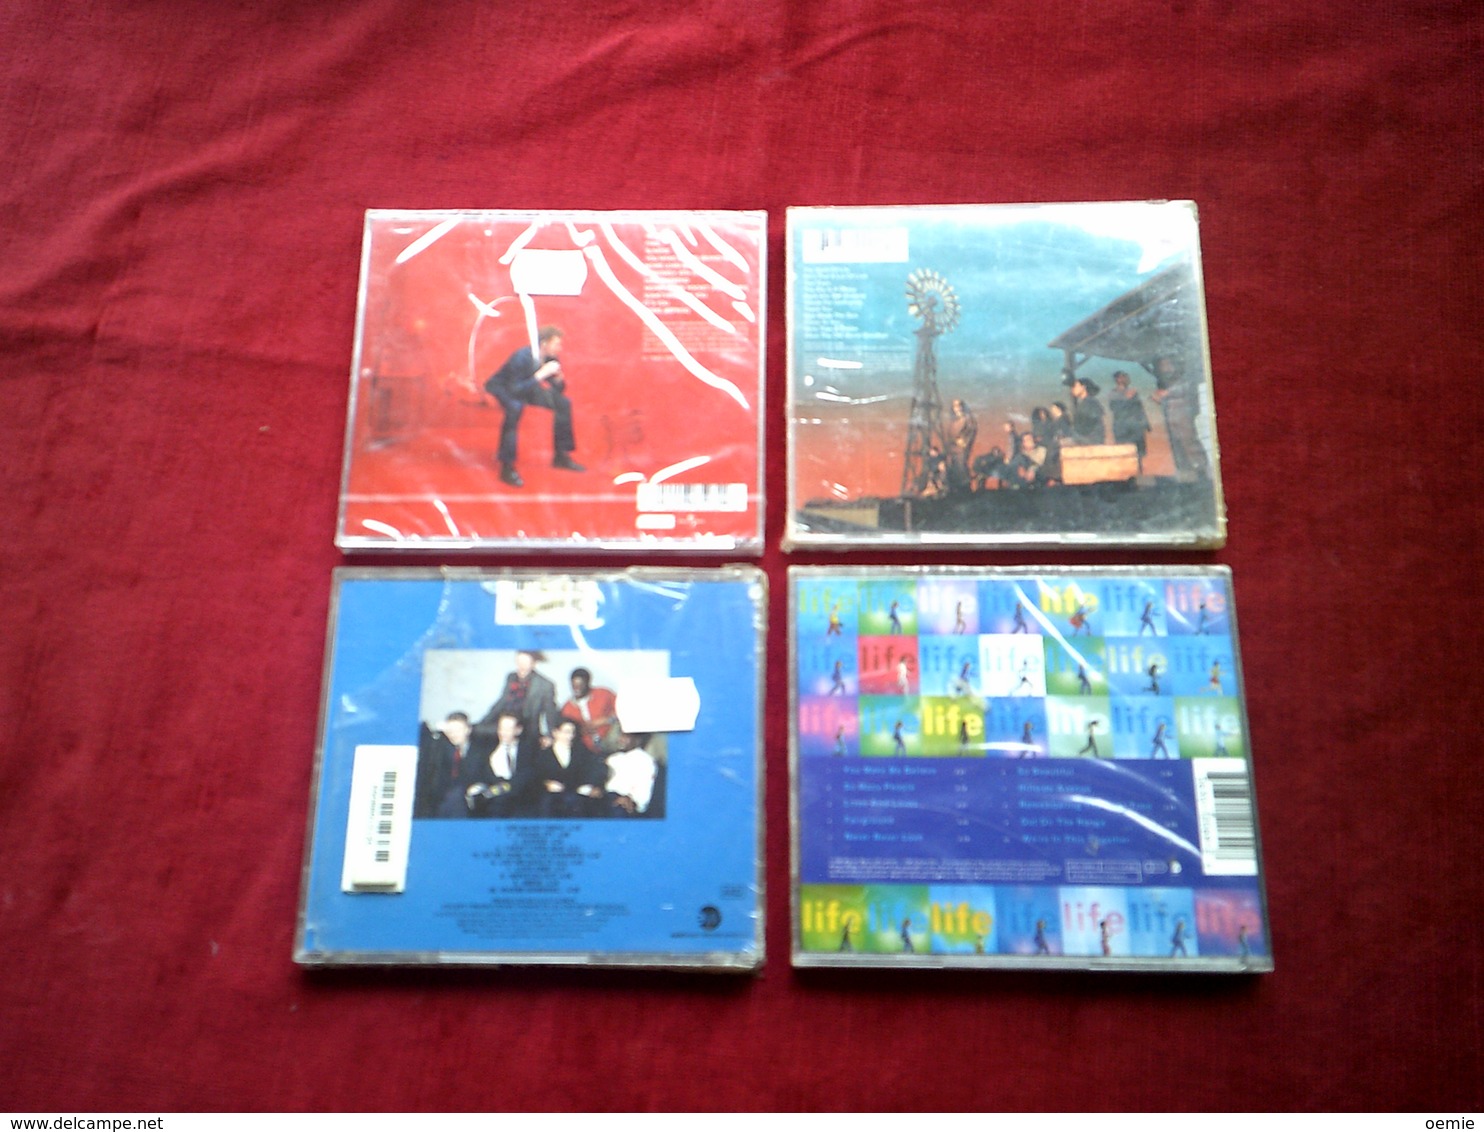 COLLECTION DE 4 CD ALBUM + 2 CD SINGLE   DE SIMPLY RED - Vollständige Sammlungen